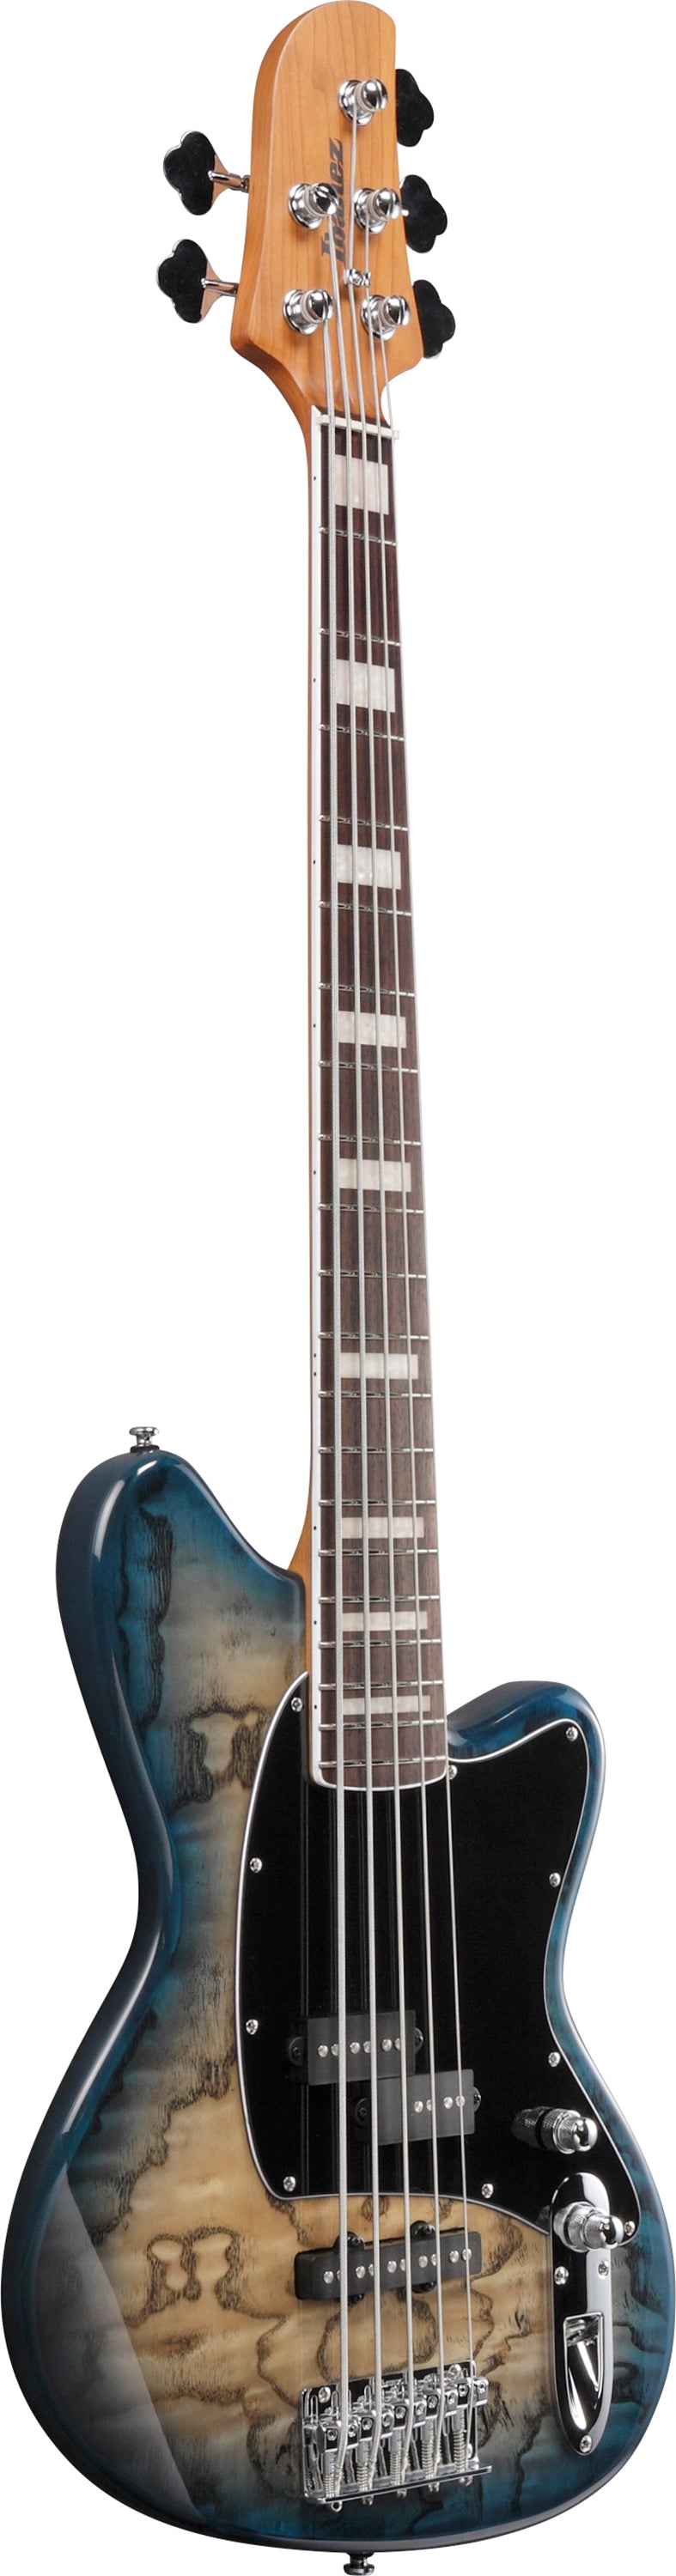 Ibanez TMB405TACBS Talman Bass Standard basse électrique 5 cordes (Cosmic Blue Starburst)